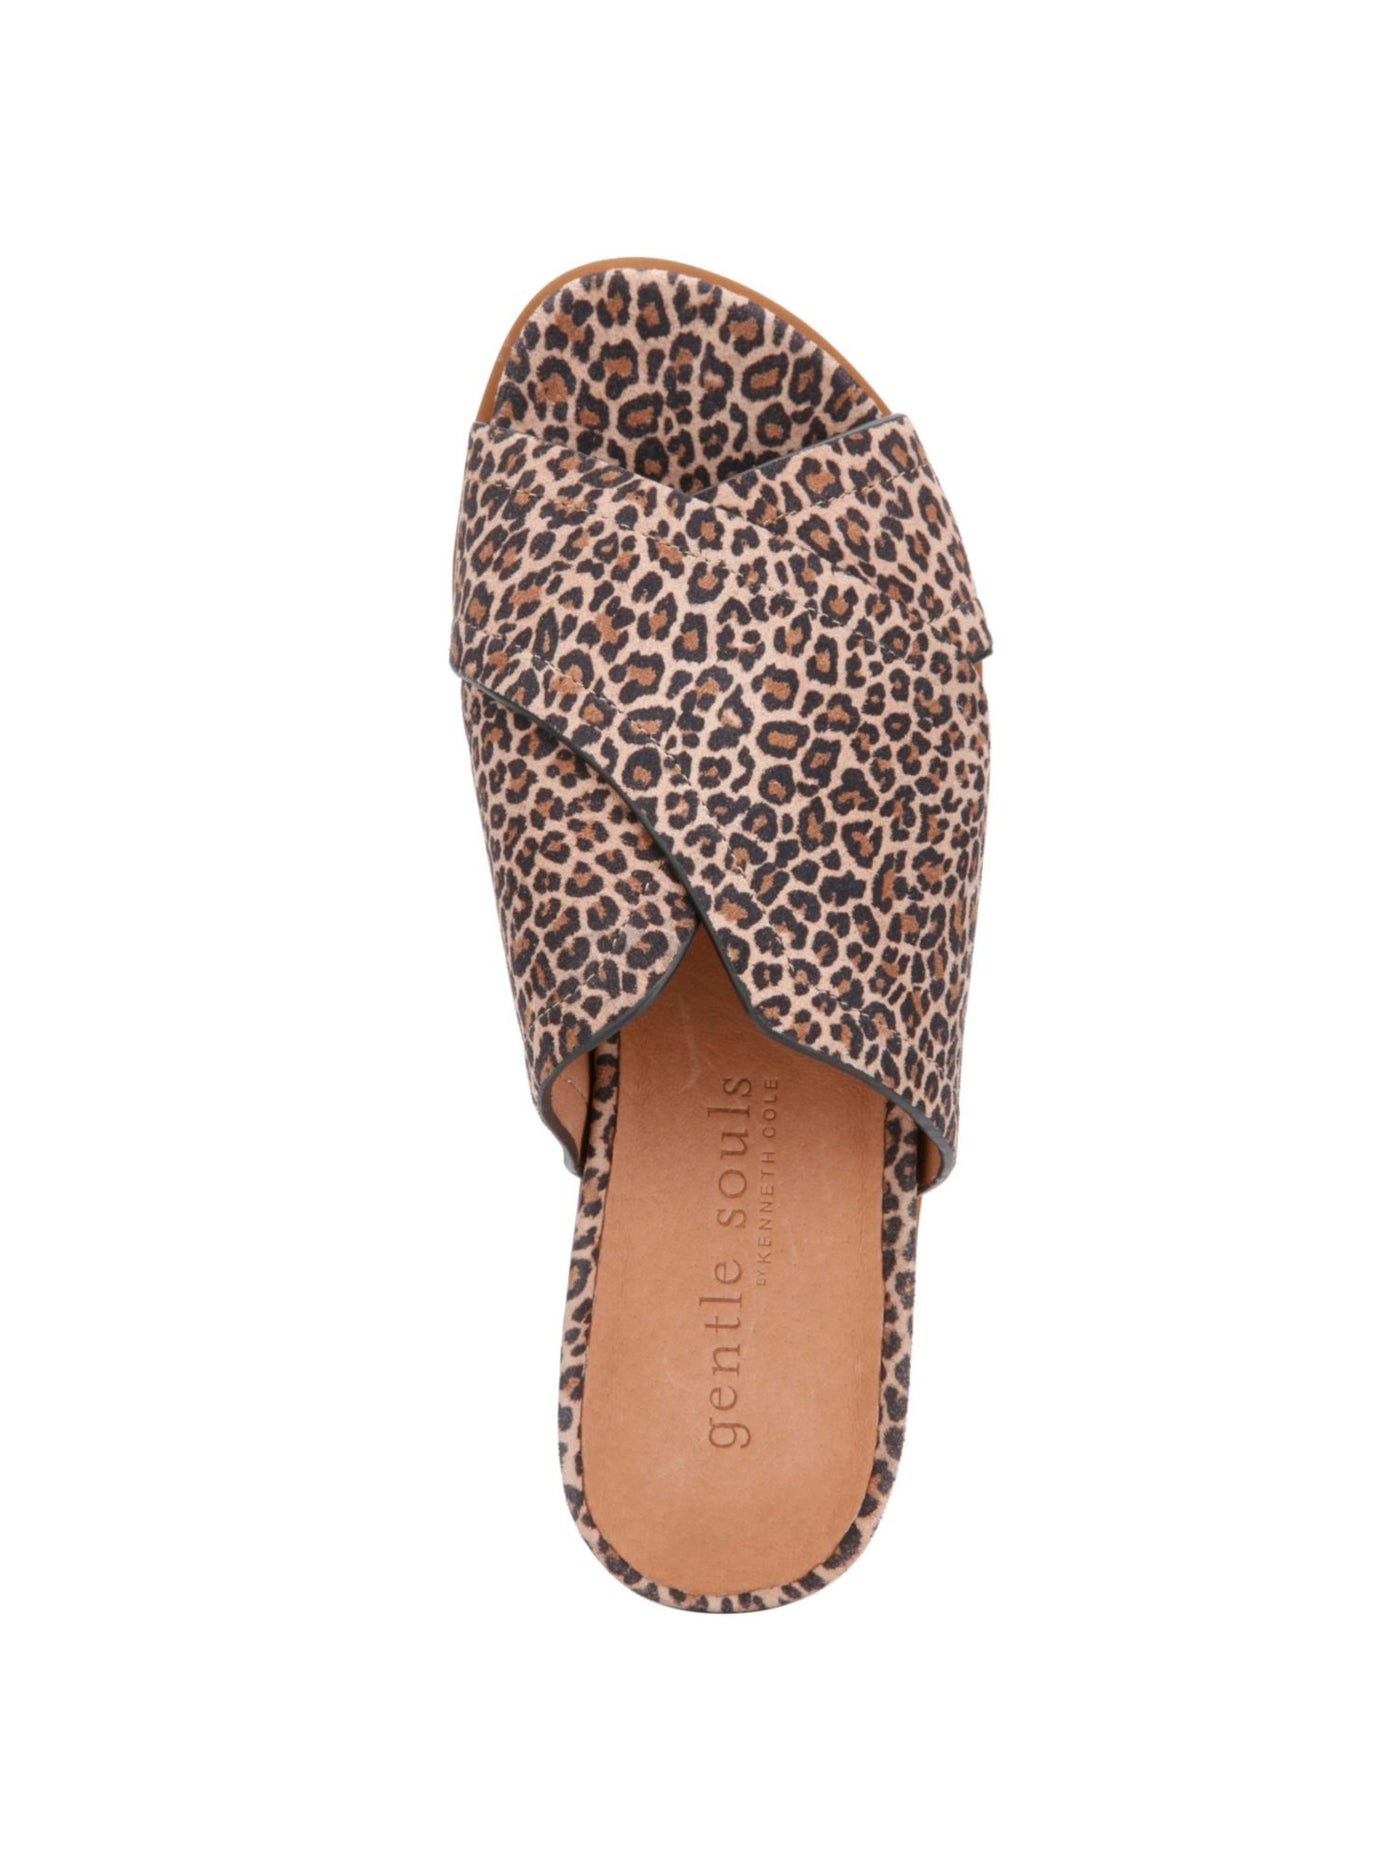 GENTLE SOULS KENNETH COLE Womens Brown Animal Print 0.5" Platform Cushioned Comfort Lavern Almond Toe Wedge Slip On Leather Slide Sandals Shoes 6